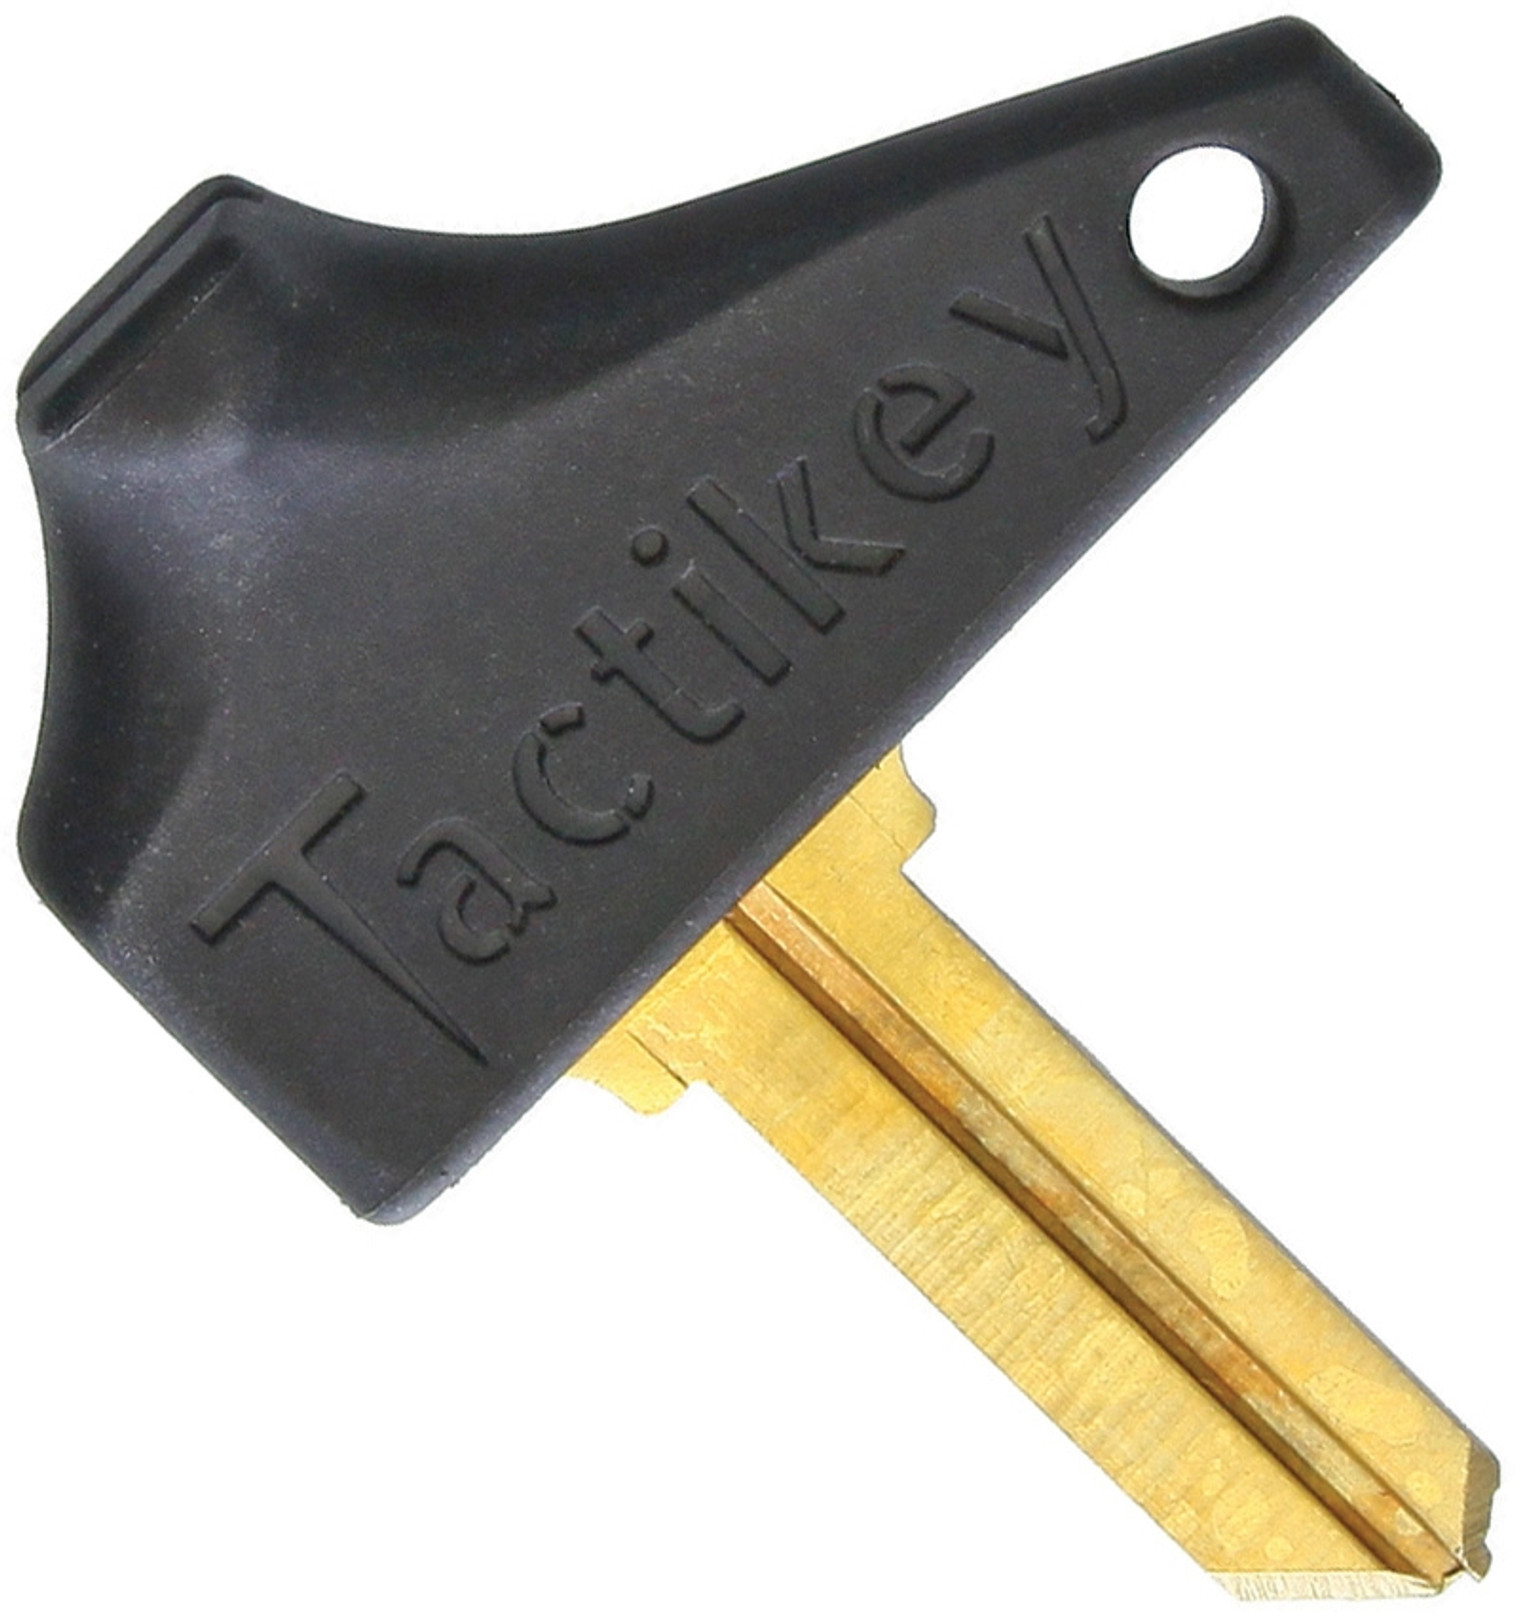 Tactikey EDC Self-Defense